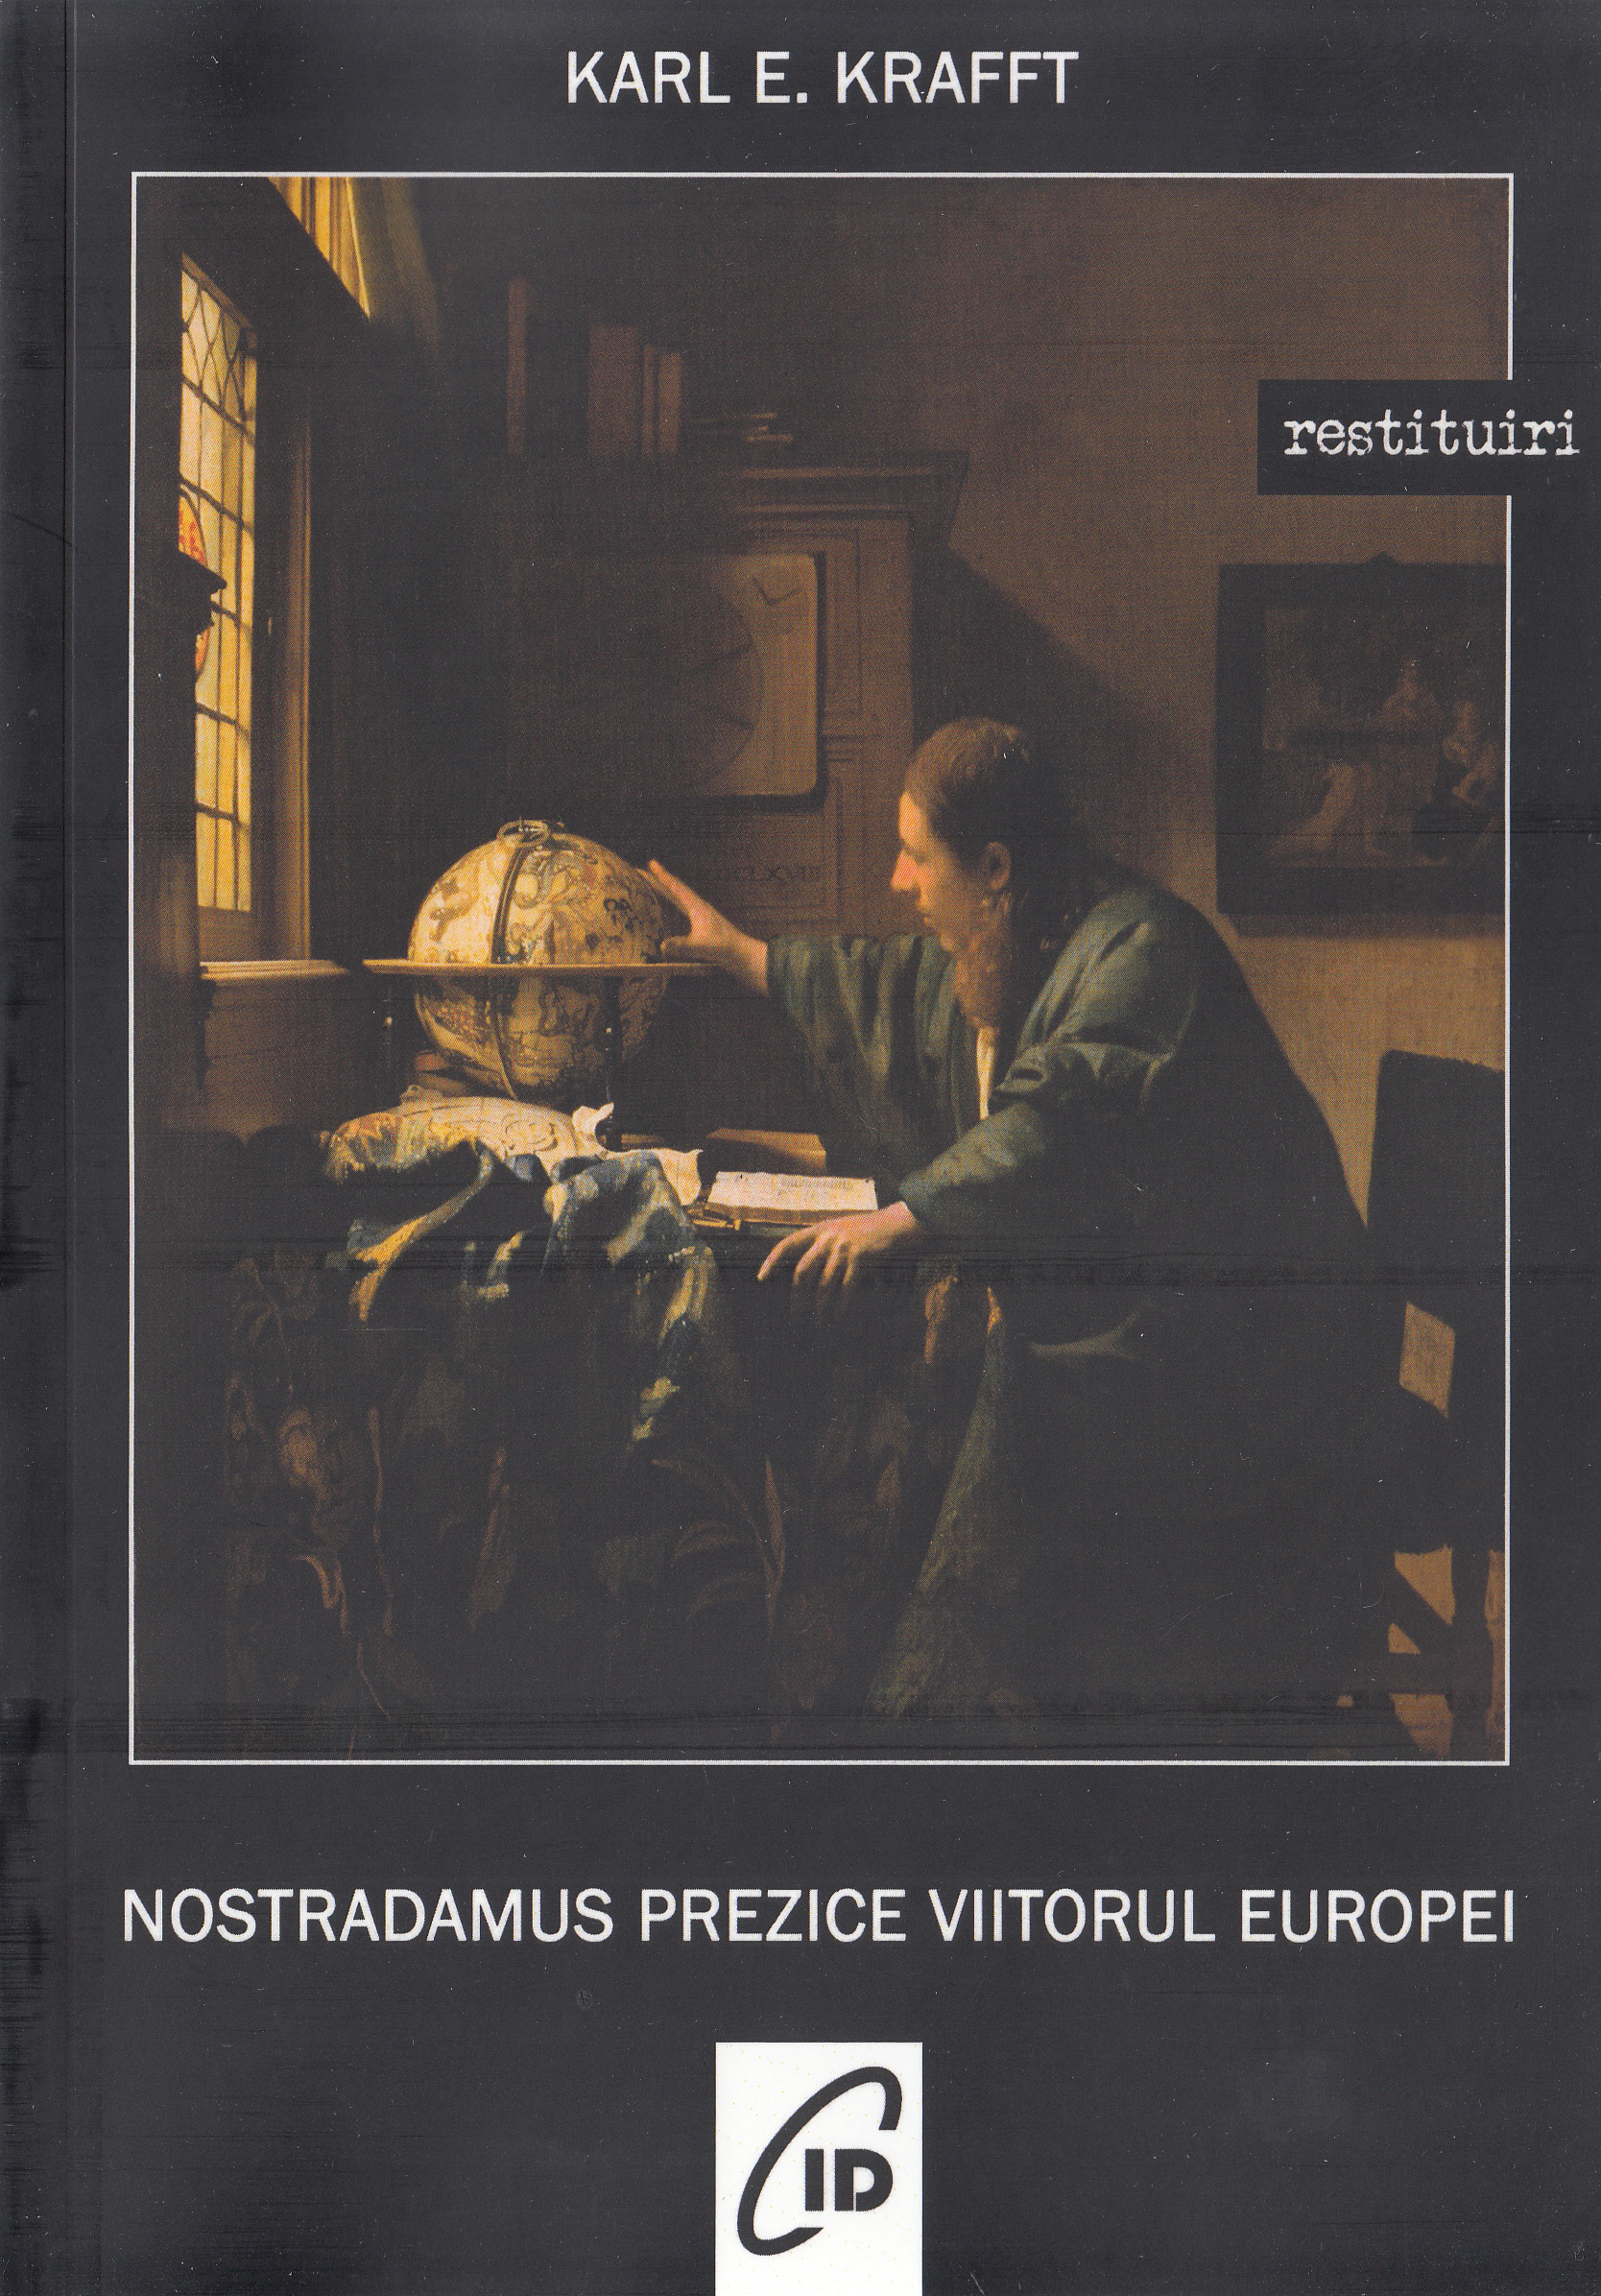 Nostradamus prezice viitorul Europei - Karl E. Krafft